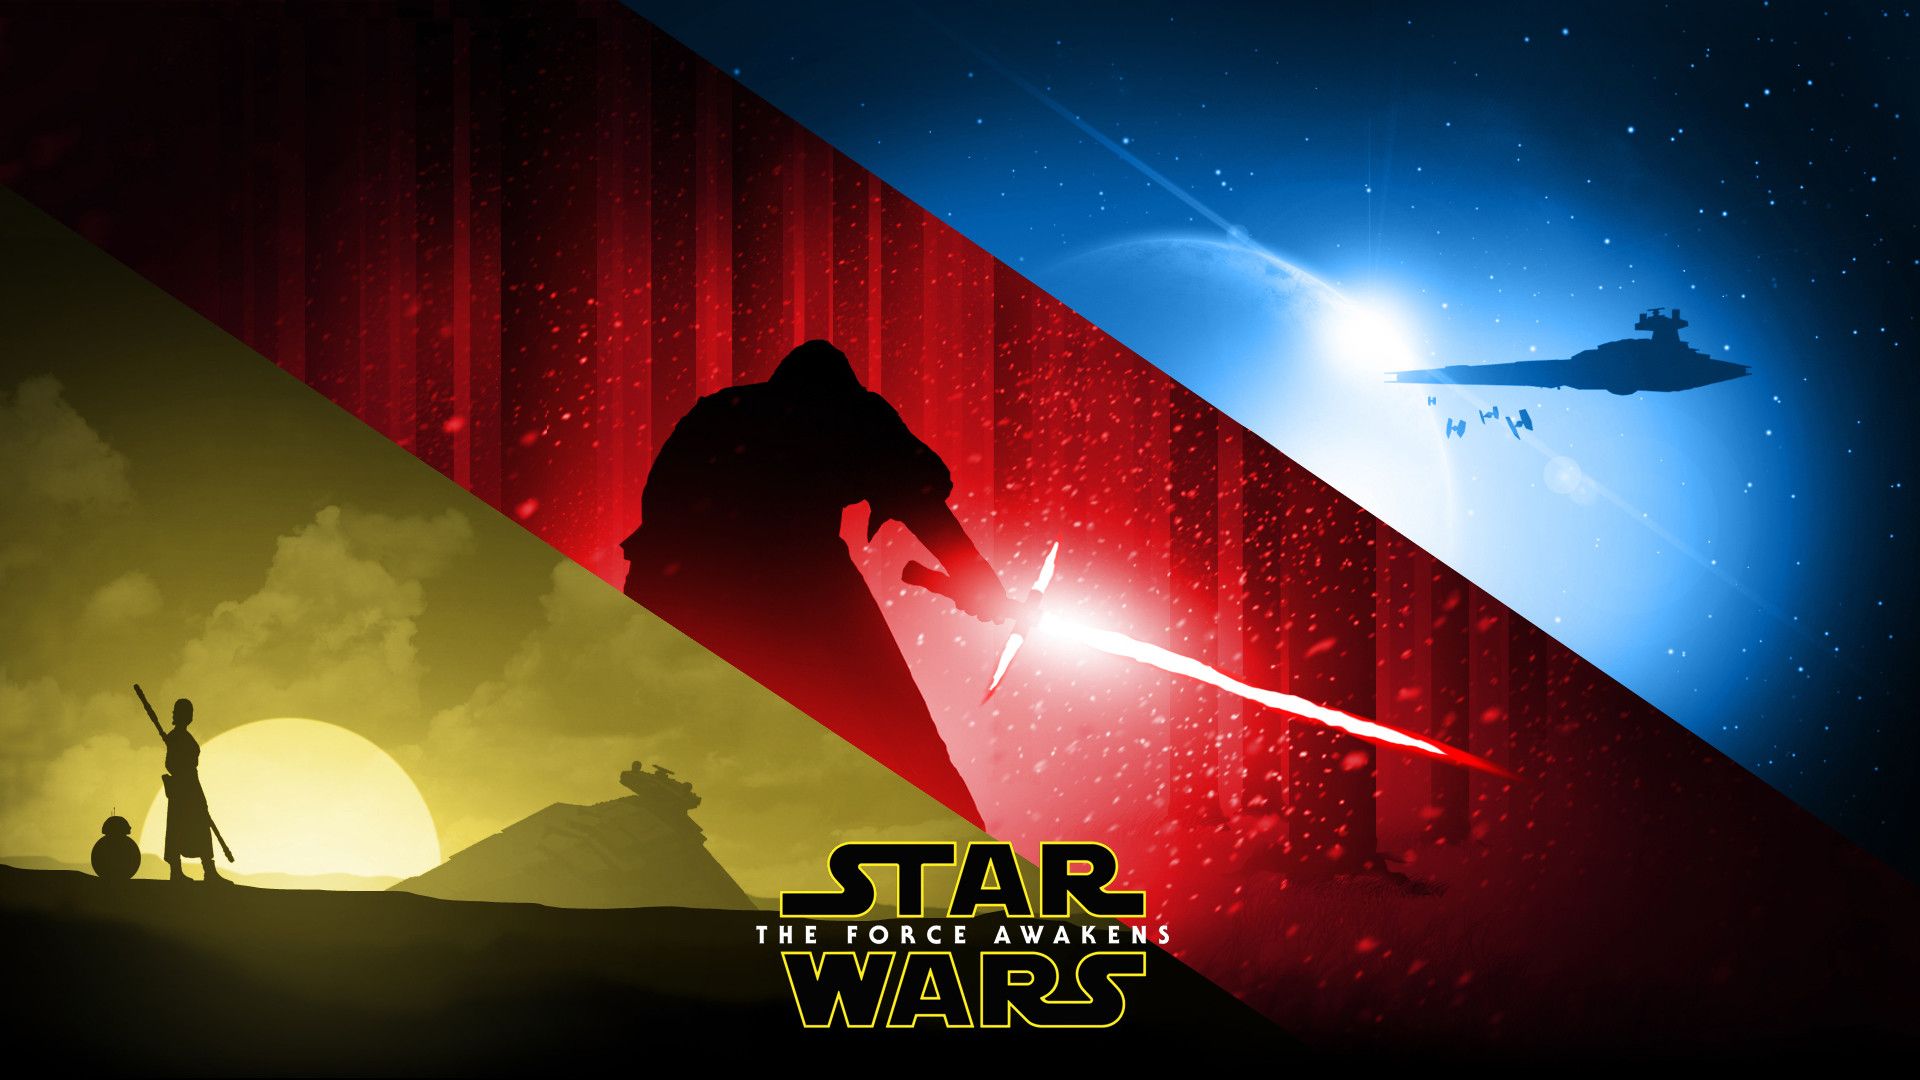 Star Wars Sith Empire Wallpaper Image Click